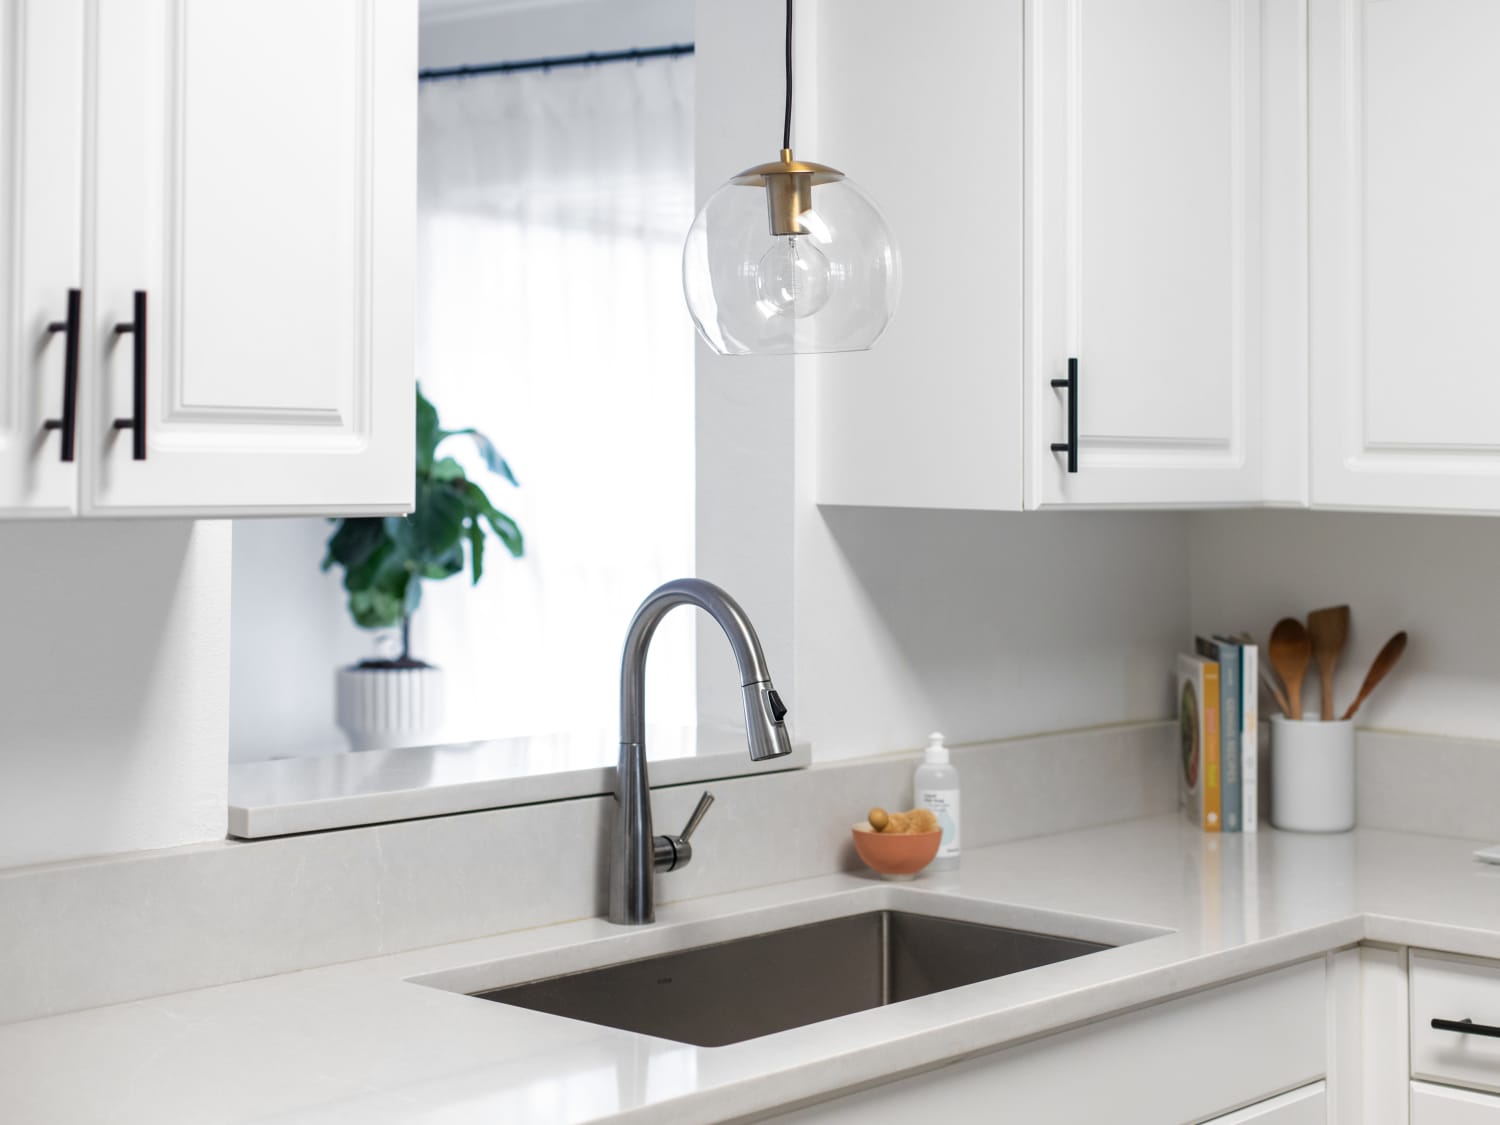 single pendant lighting over kitchen sink